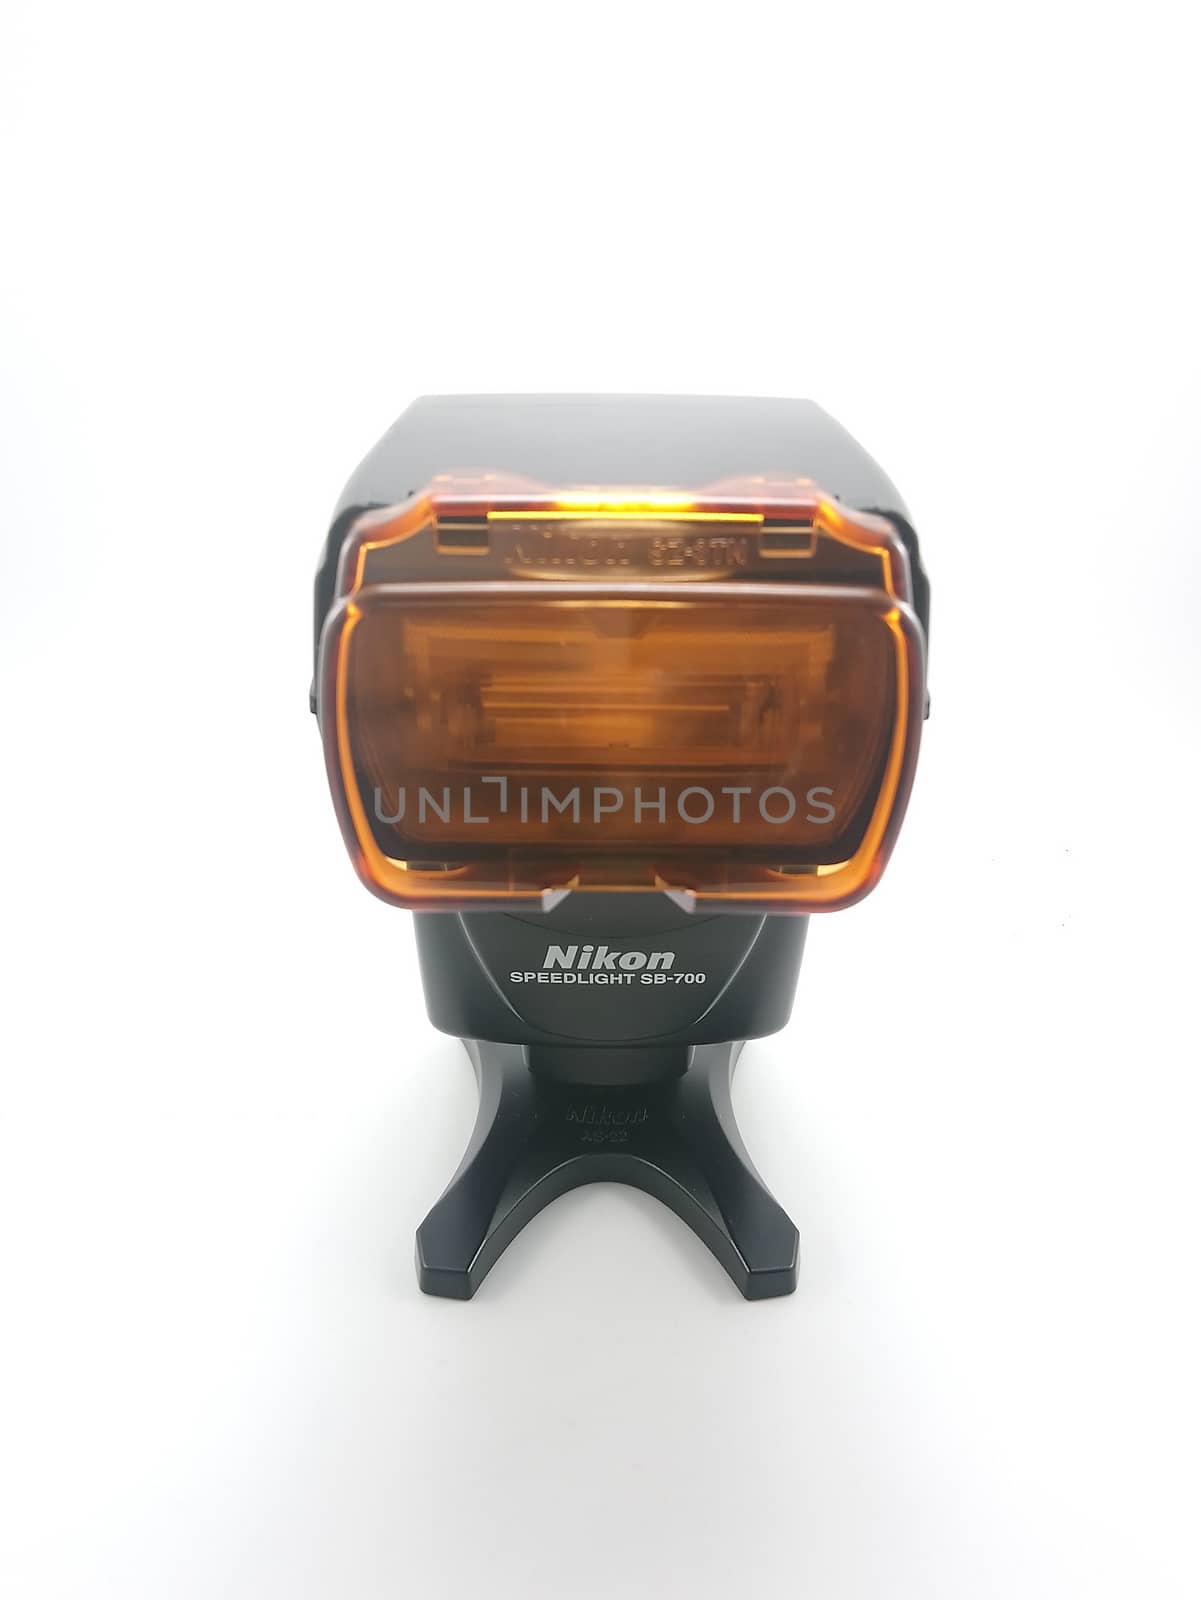 MANILA, PH - SEPT 25 - Nikon sb 700 flash speedlight with incandescent filter on September 25, 2020 in Manila, Philippines.